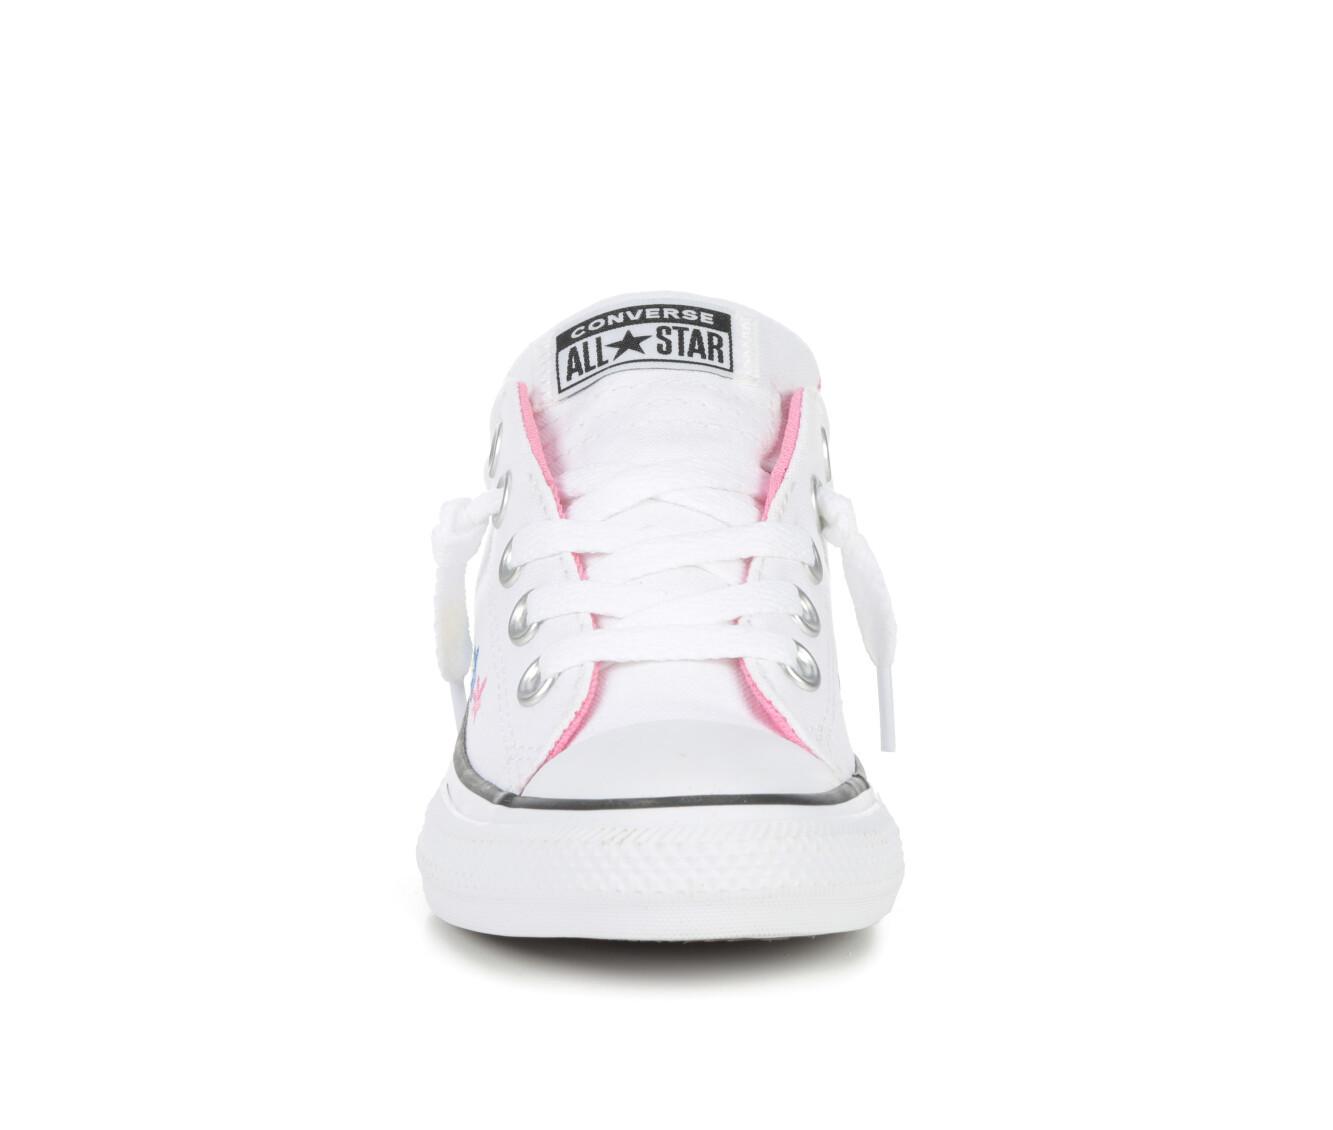 Girls' Converse Little Kid CTAS Street Ox Bloom Sneakers